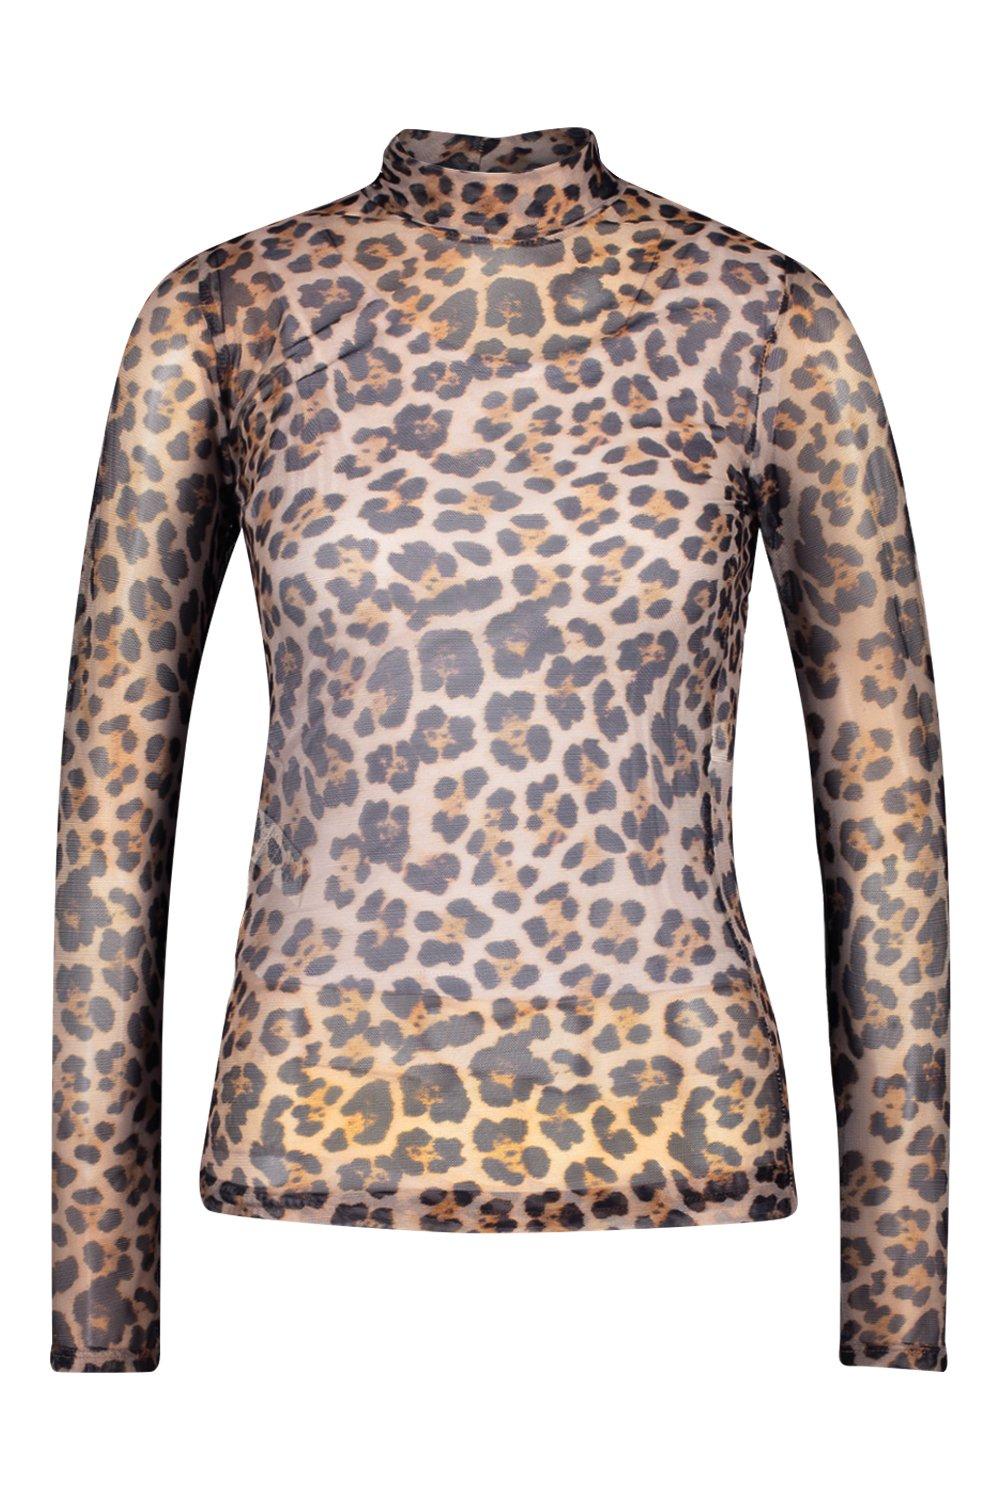 Leopard Mesh Turtleneck Top - Multicolor